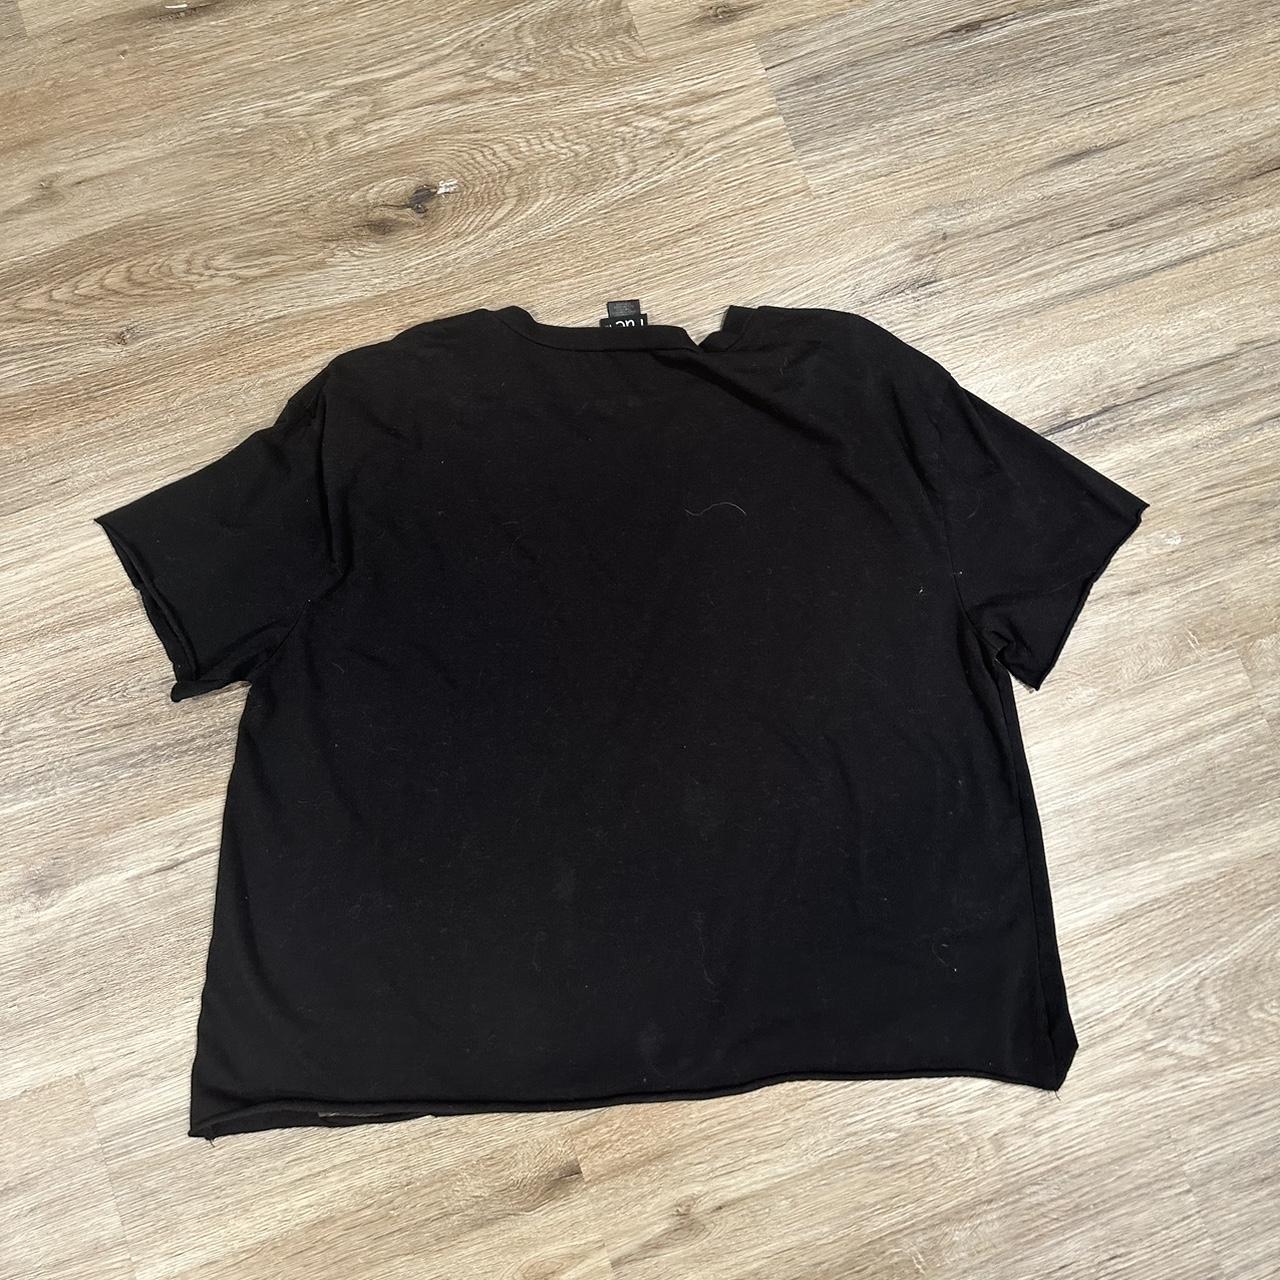 Rue 21 shirt Tagged a size 2x but fits like a... - Depop